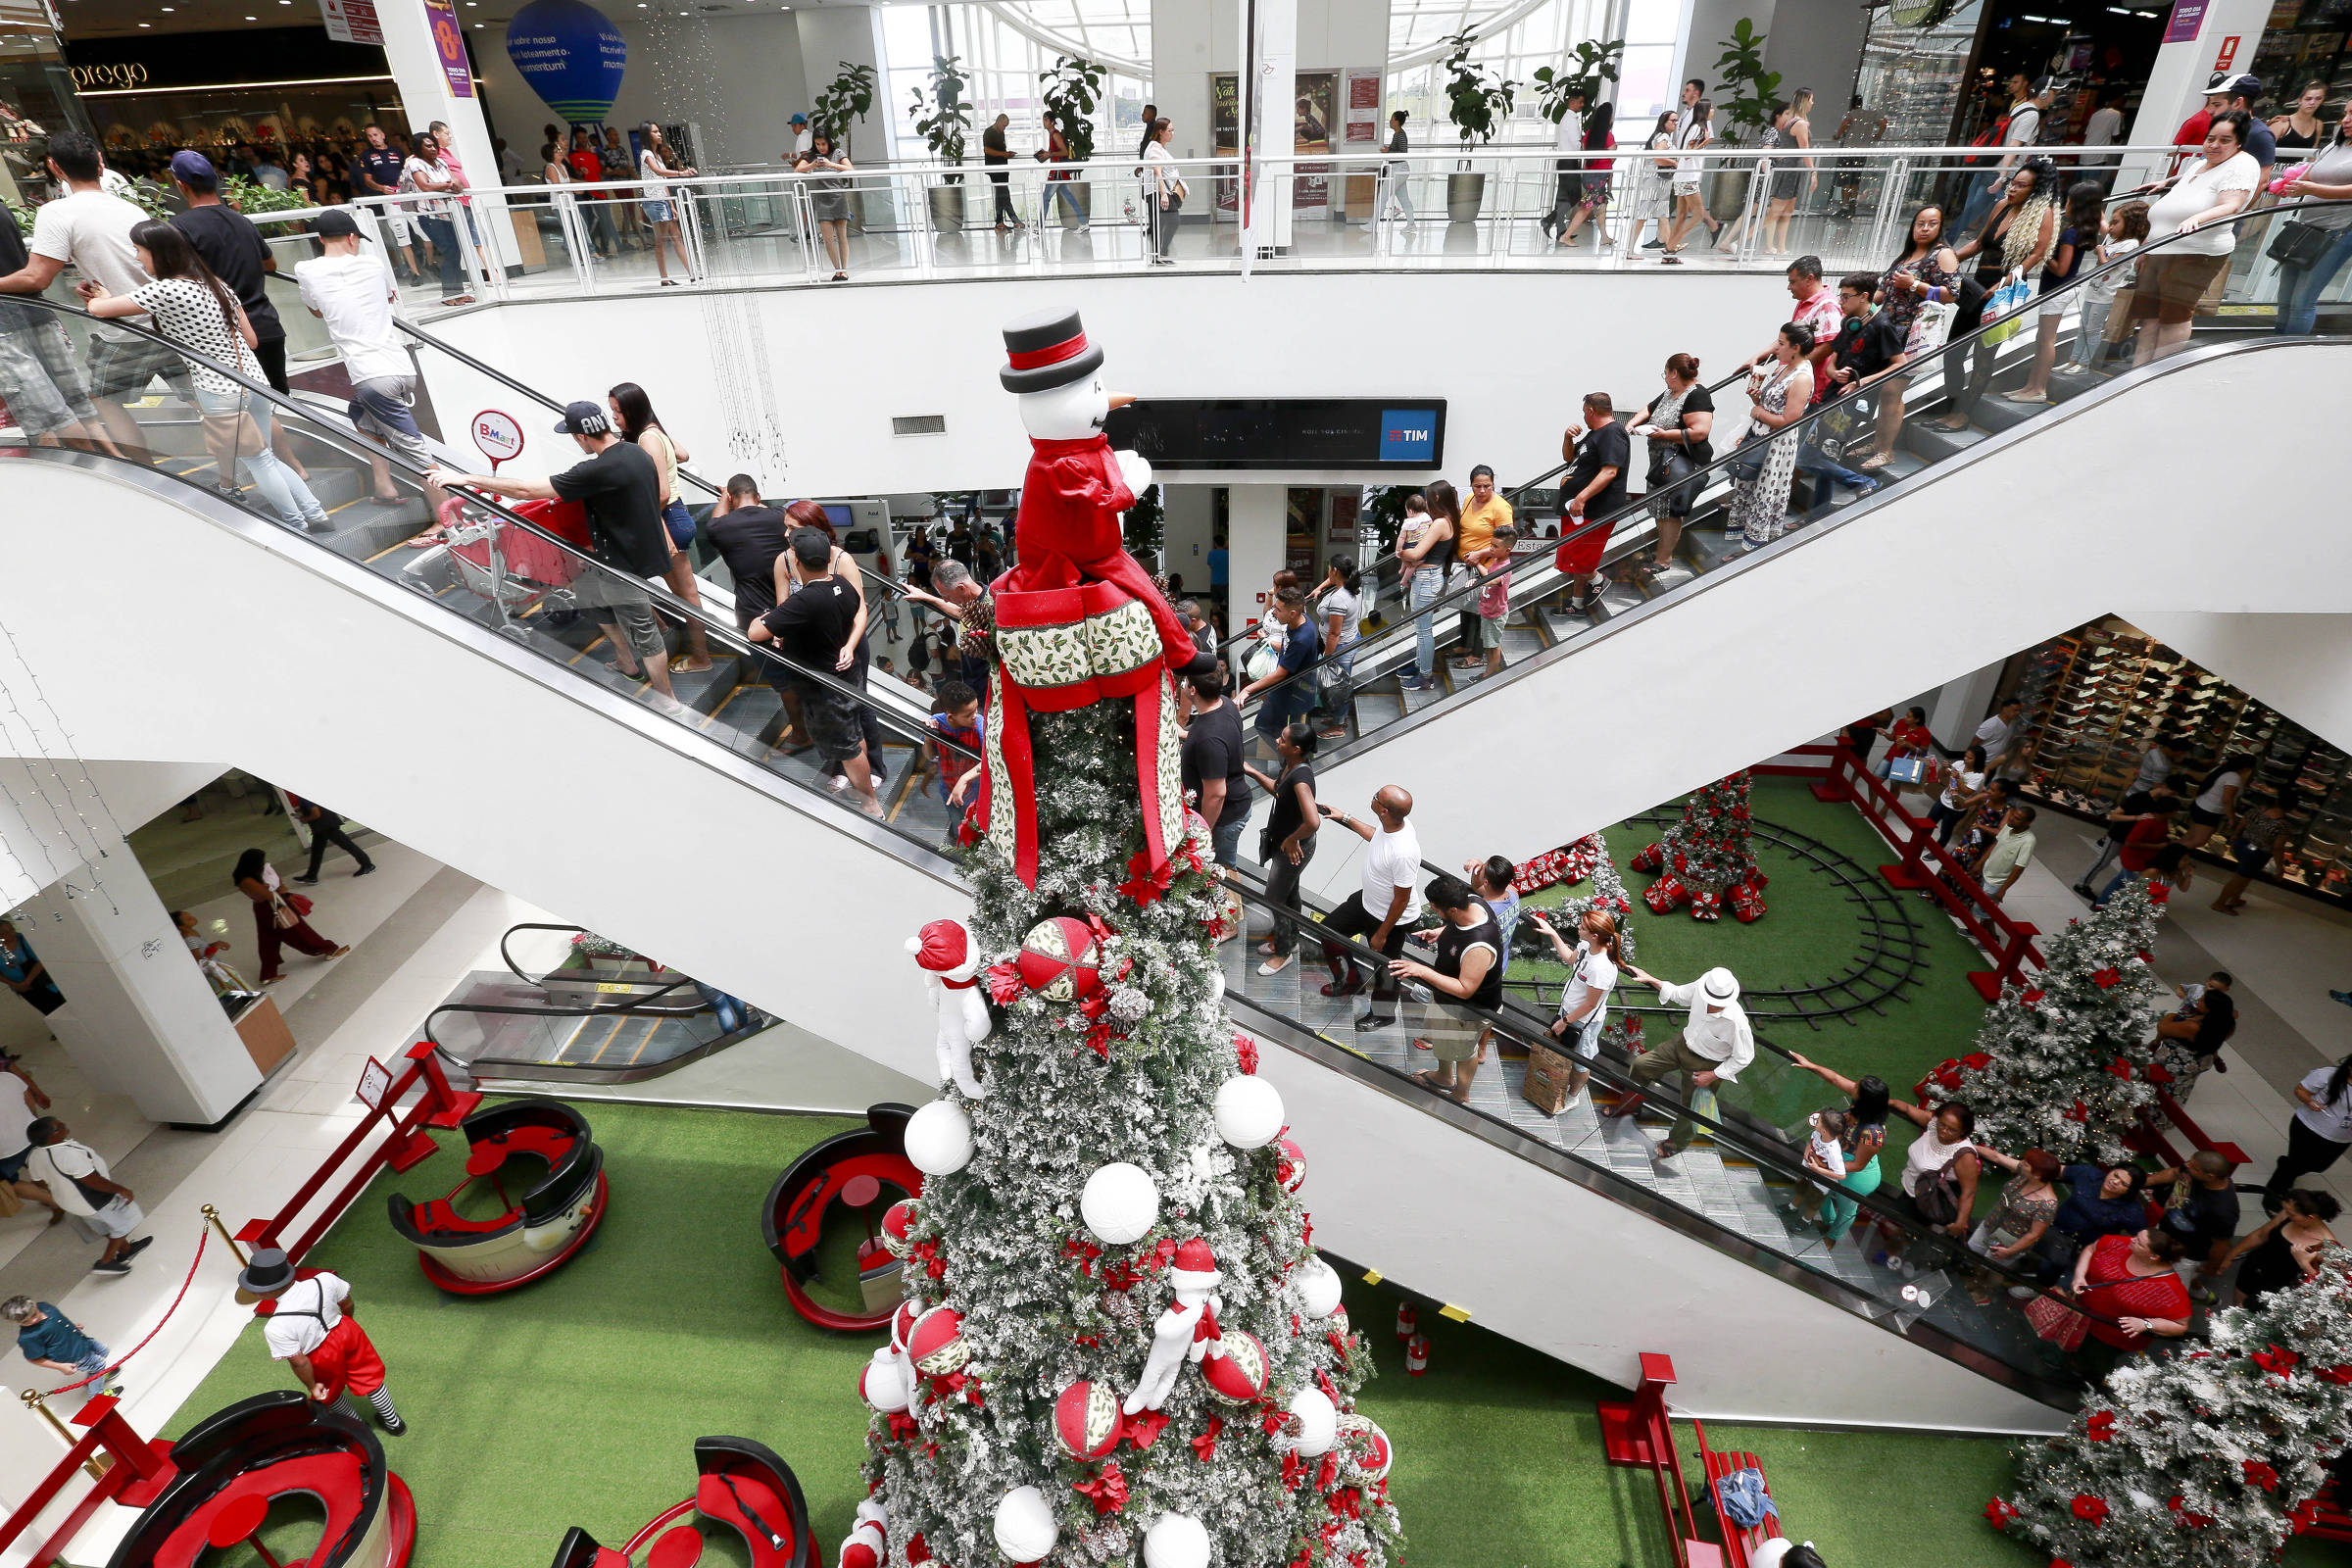 Às vésperas do Natal, shopping enche para compras de última hora -  24/12/2018 - Mercado - Folha